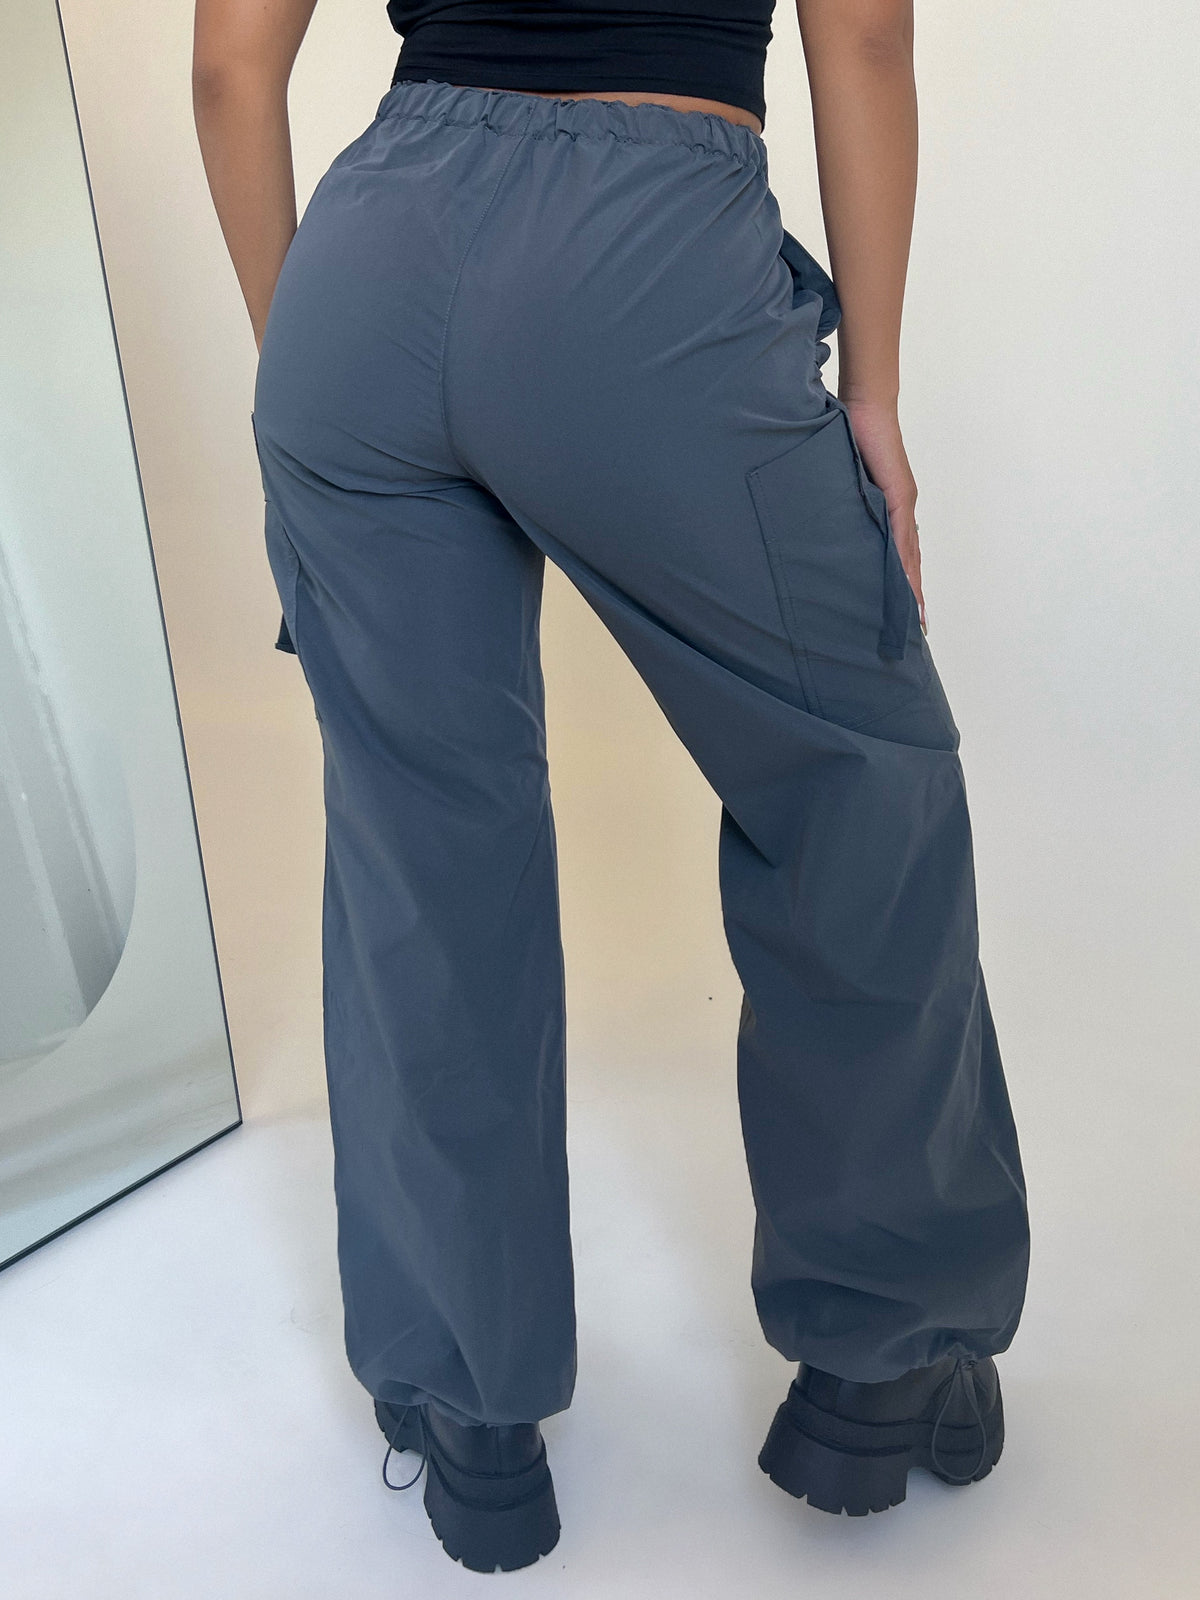 Maria Cargo Pants (Charcoal)